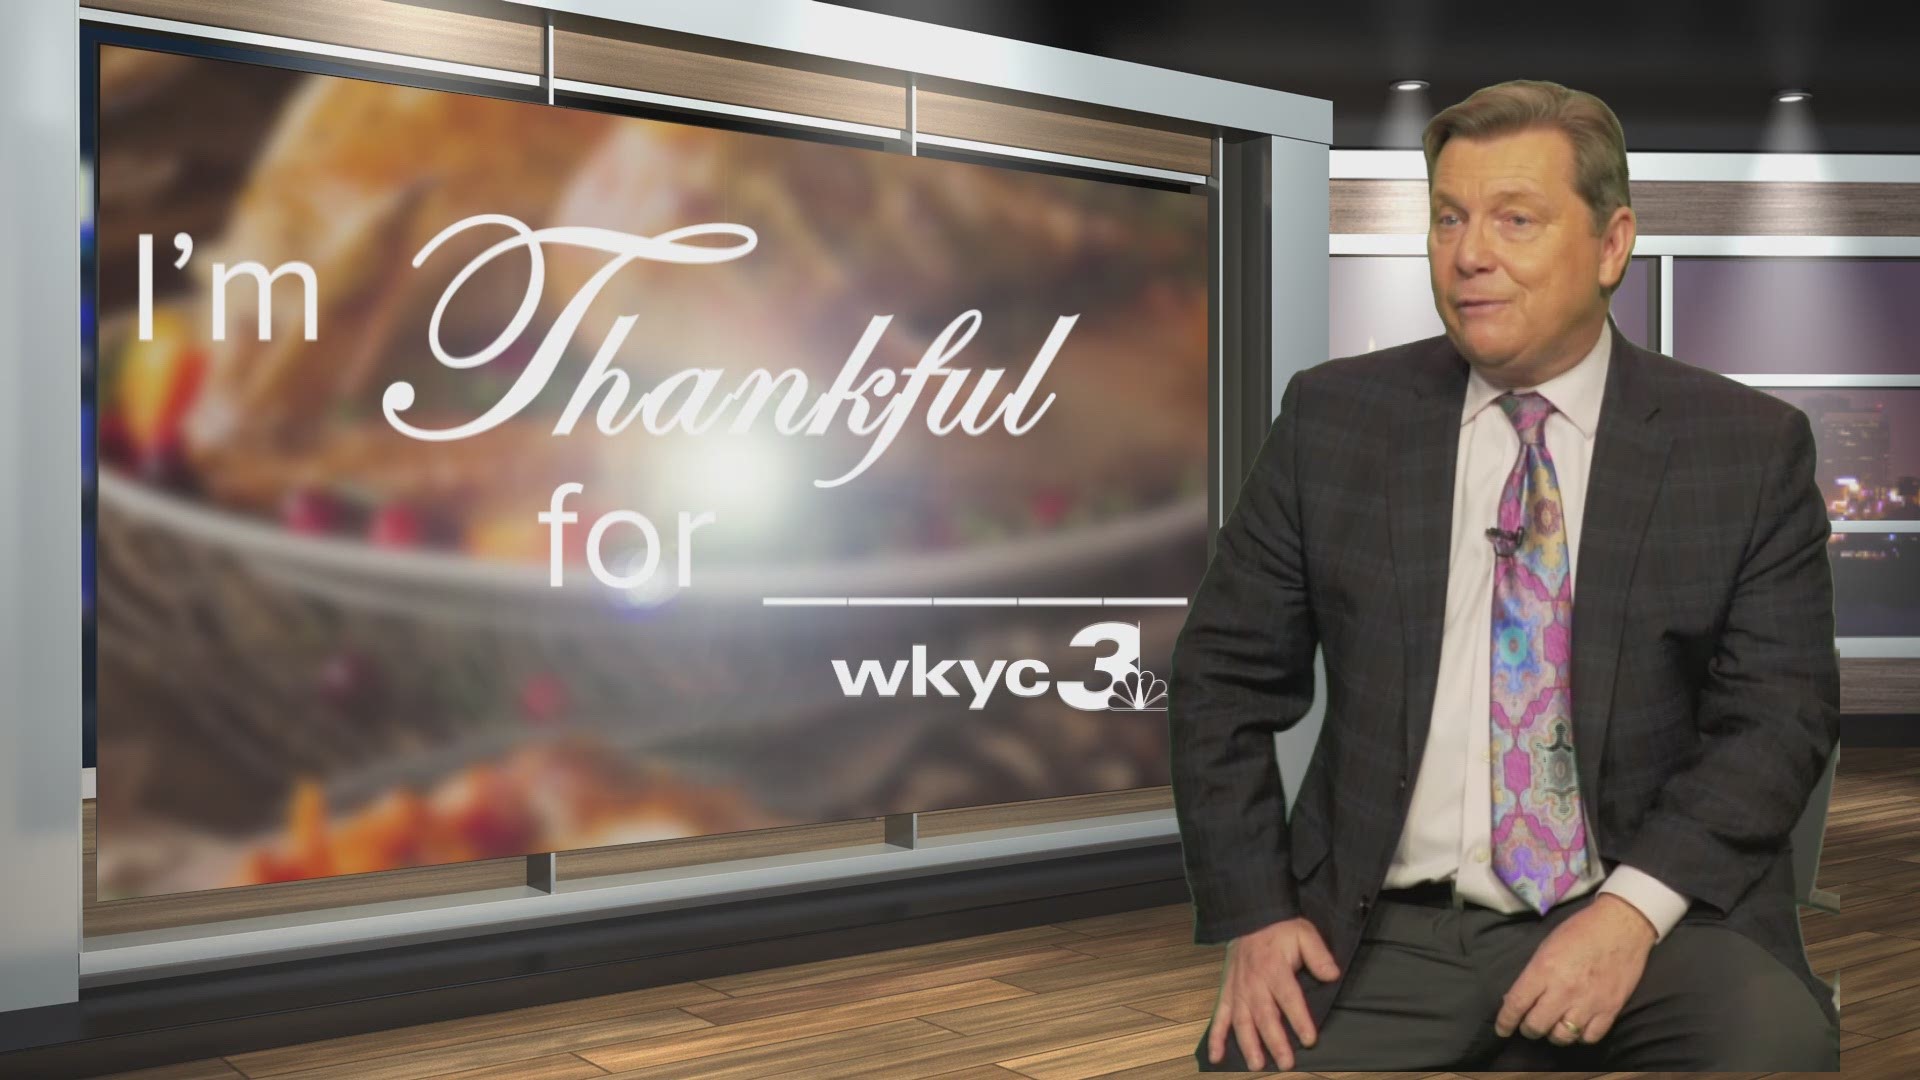 Why we're thankful: WKYC's Jim Donovan